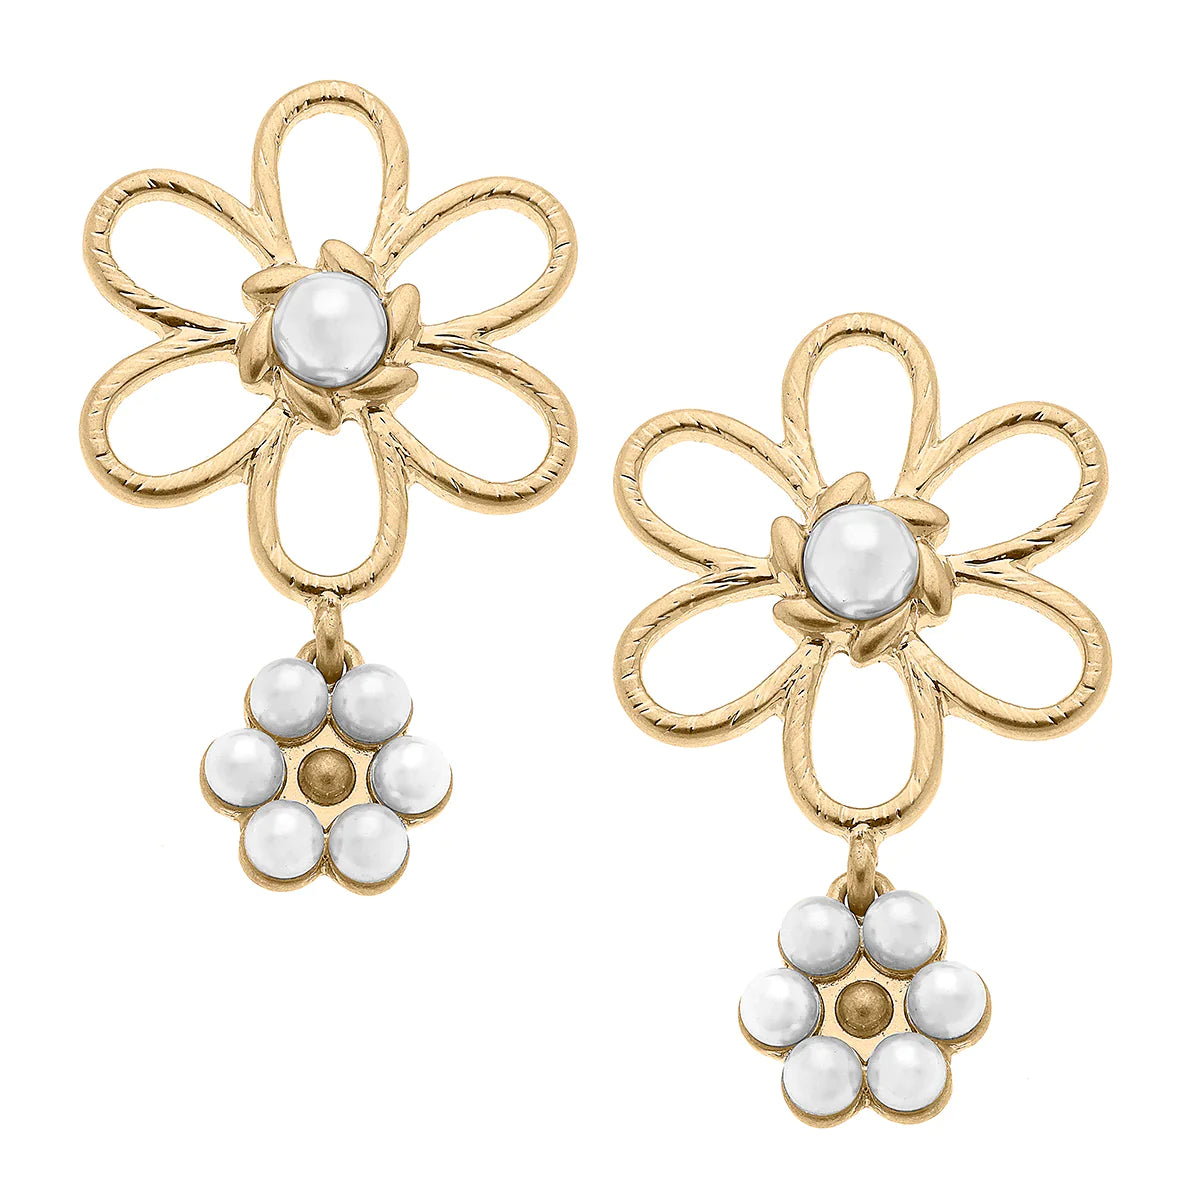 Dannie Pearl Flower Drop Earrings in Ivory & Worn Gold